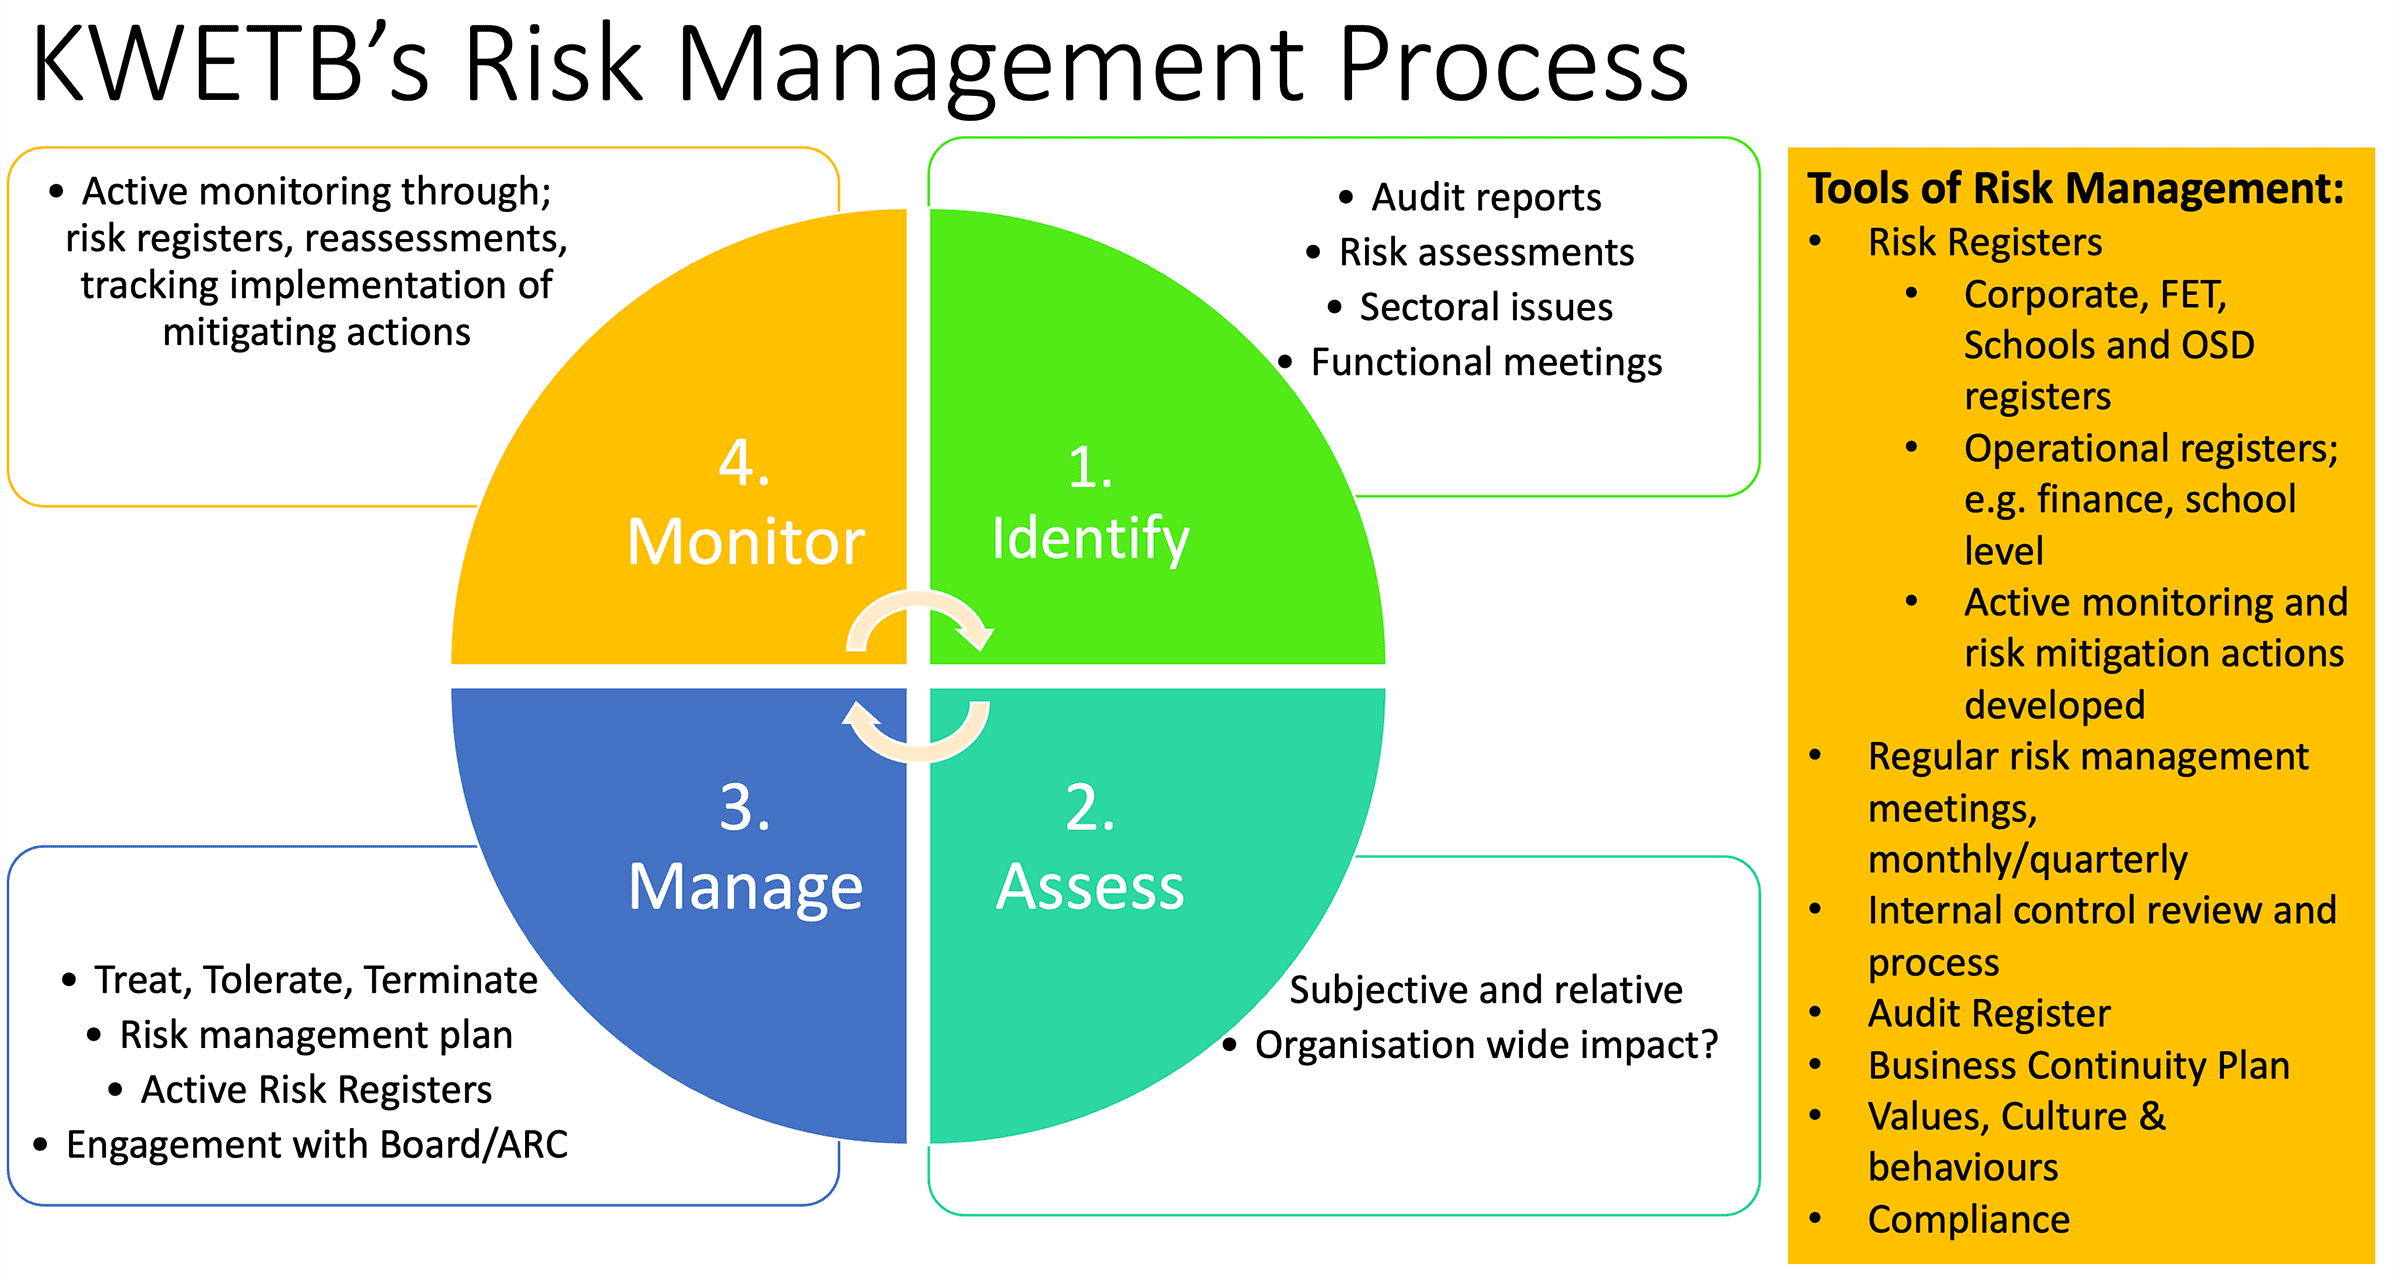 KWETB's Risk Management Process  diagram 